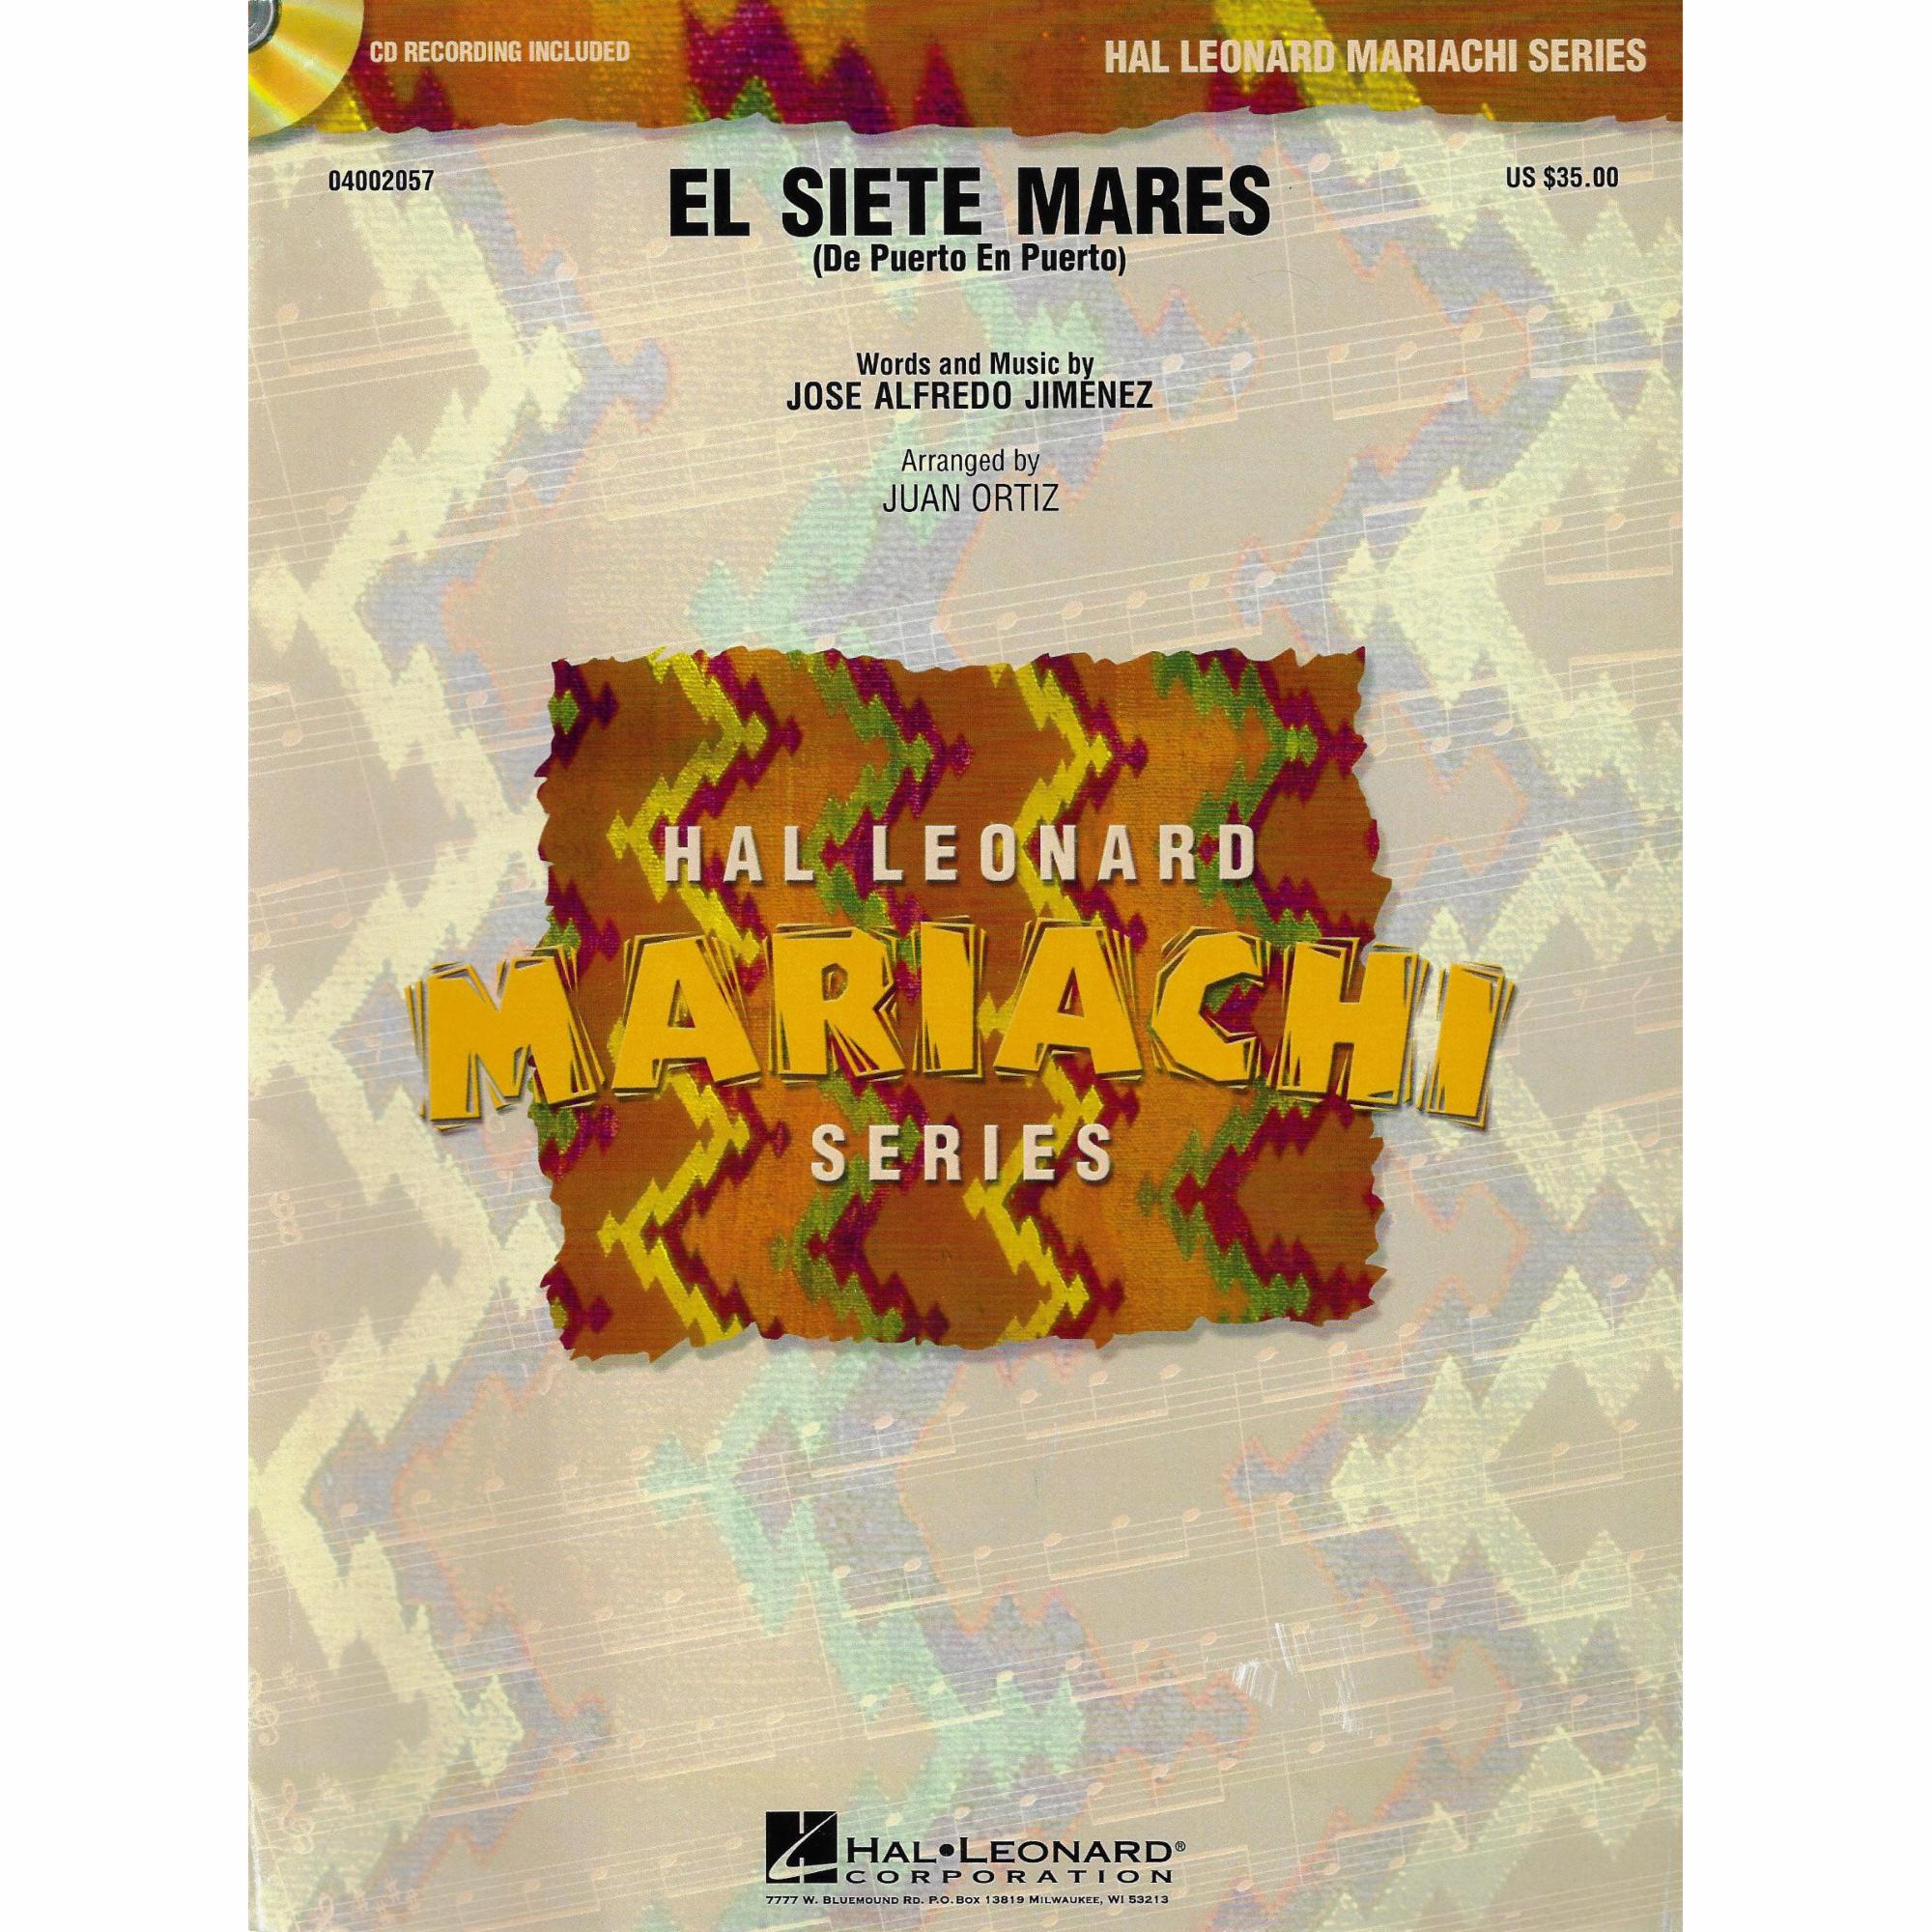 El Siete Mares for Mariachi Band